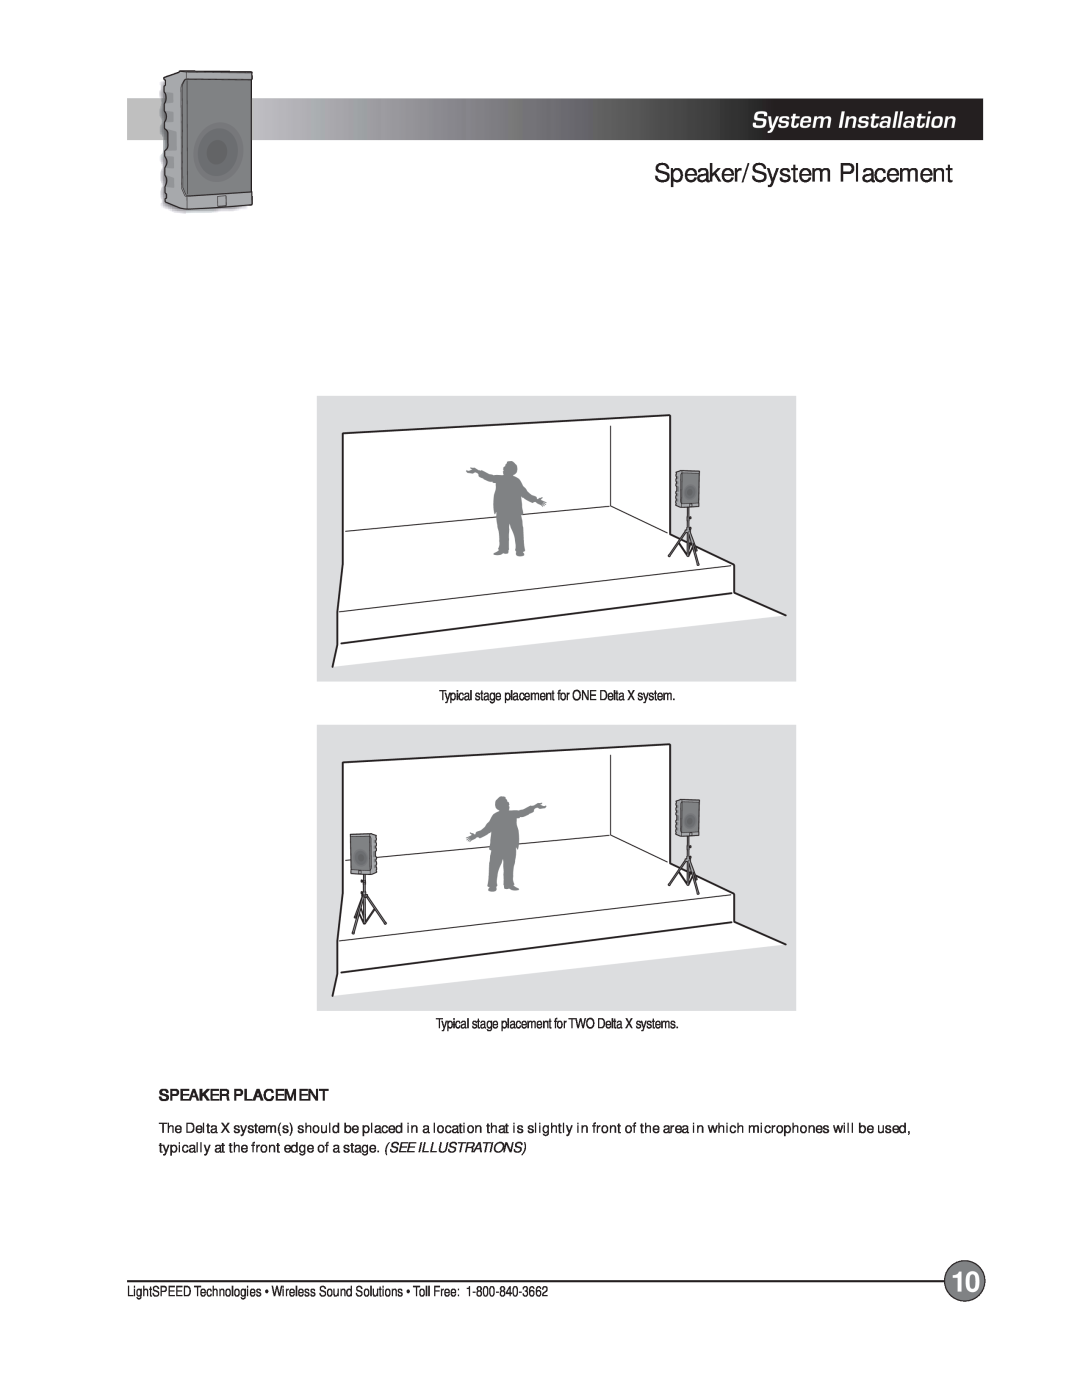 LightSpeed Technologies X12, Delta X10 manual Speaker/System Placement, System Installation, Speaker Placement 